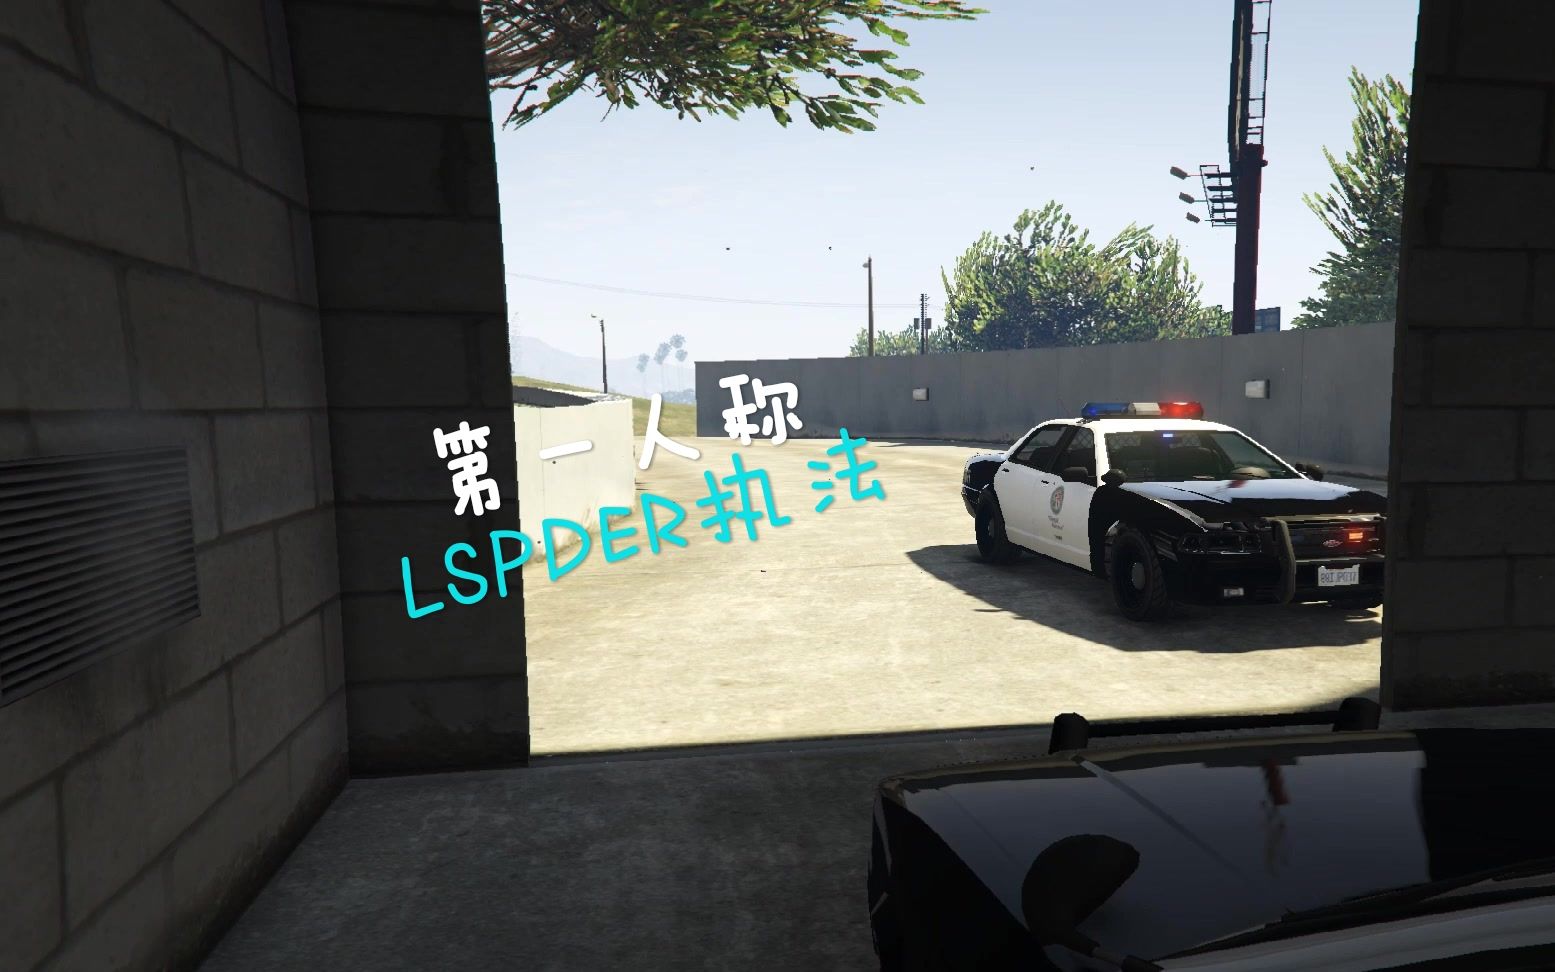 Gta5 第一人称lspder执法游戏视频 哔哩哔哩 つロ干杯 Bilibili